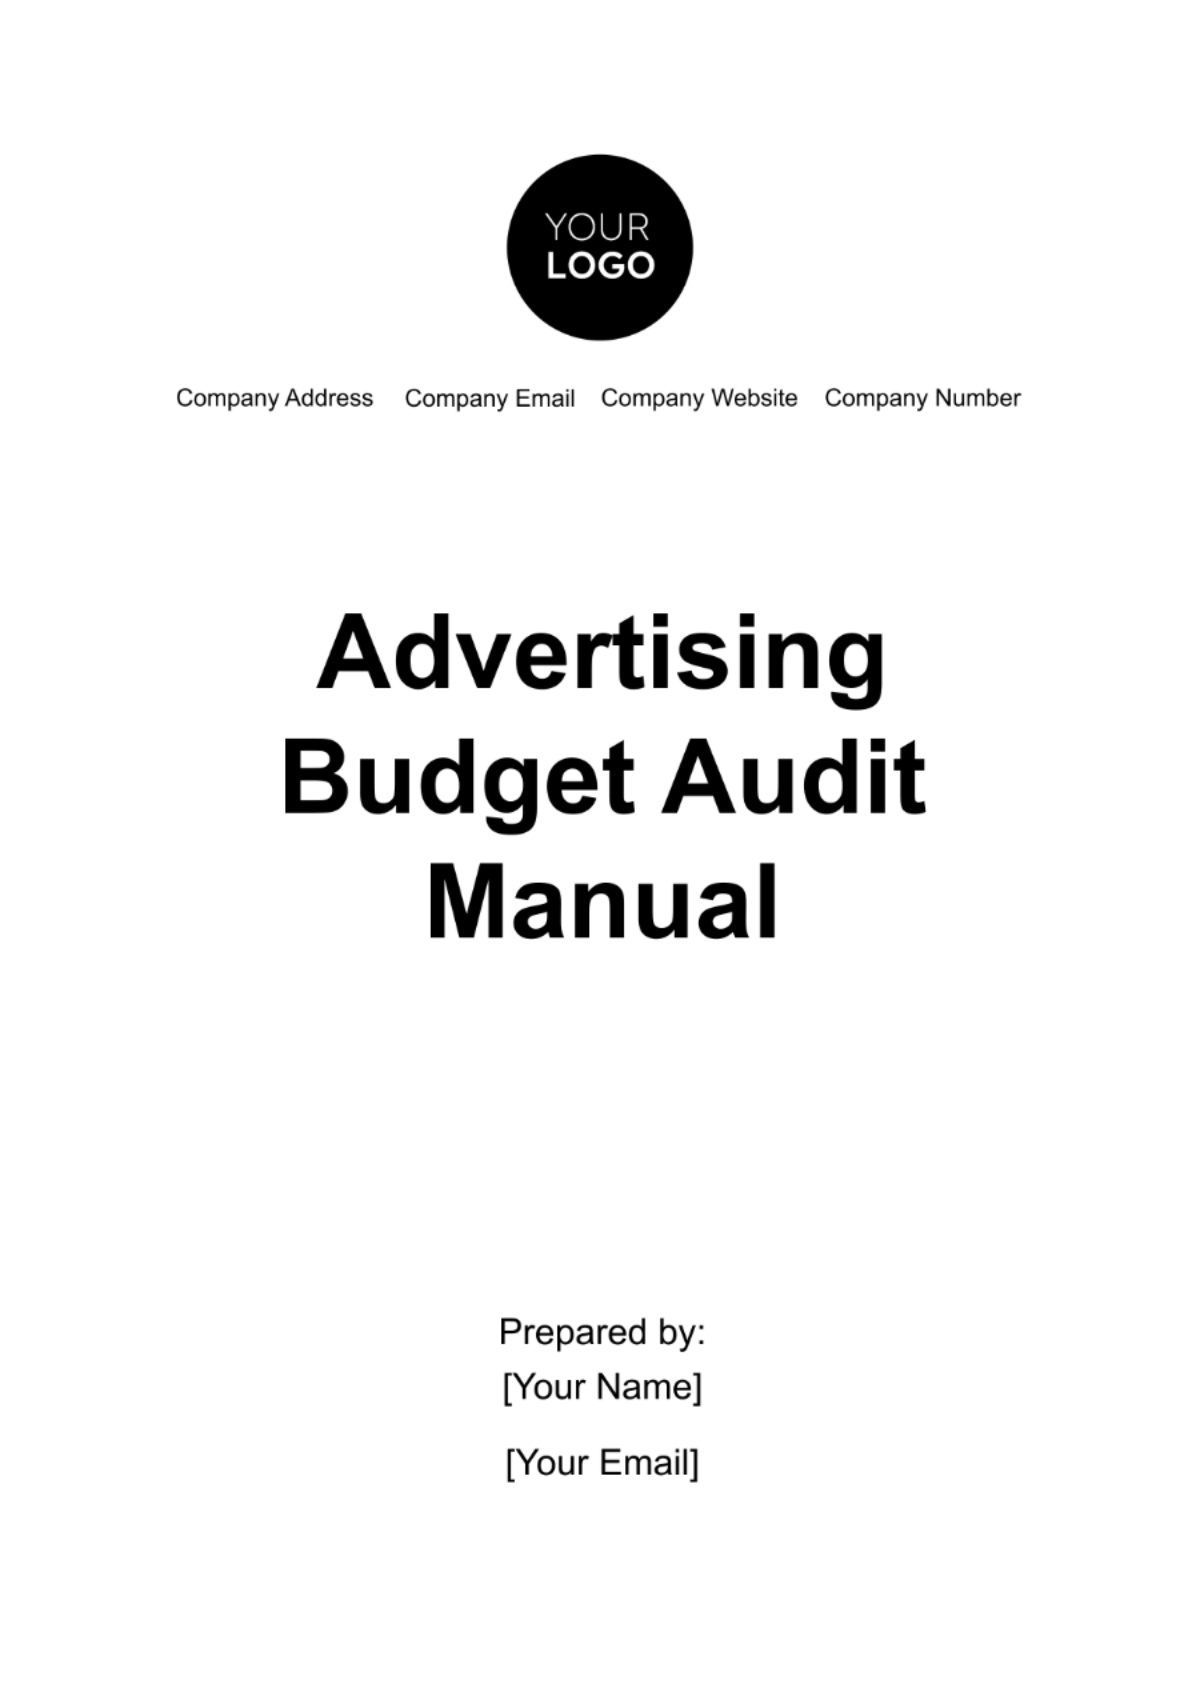 Advertising Budget Audit Manual Template